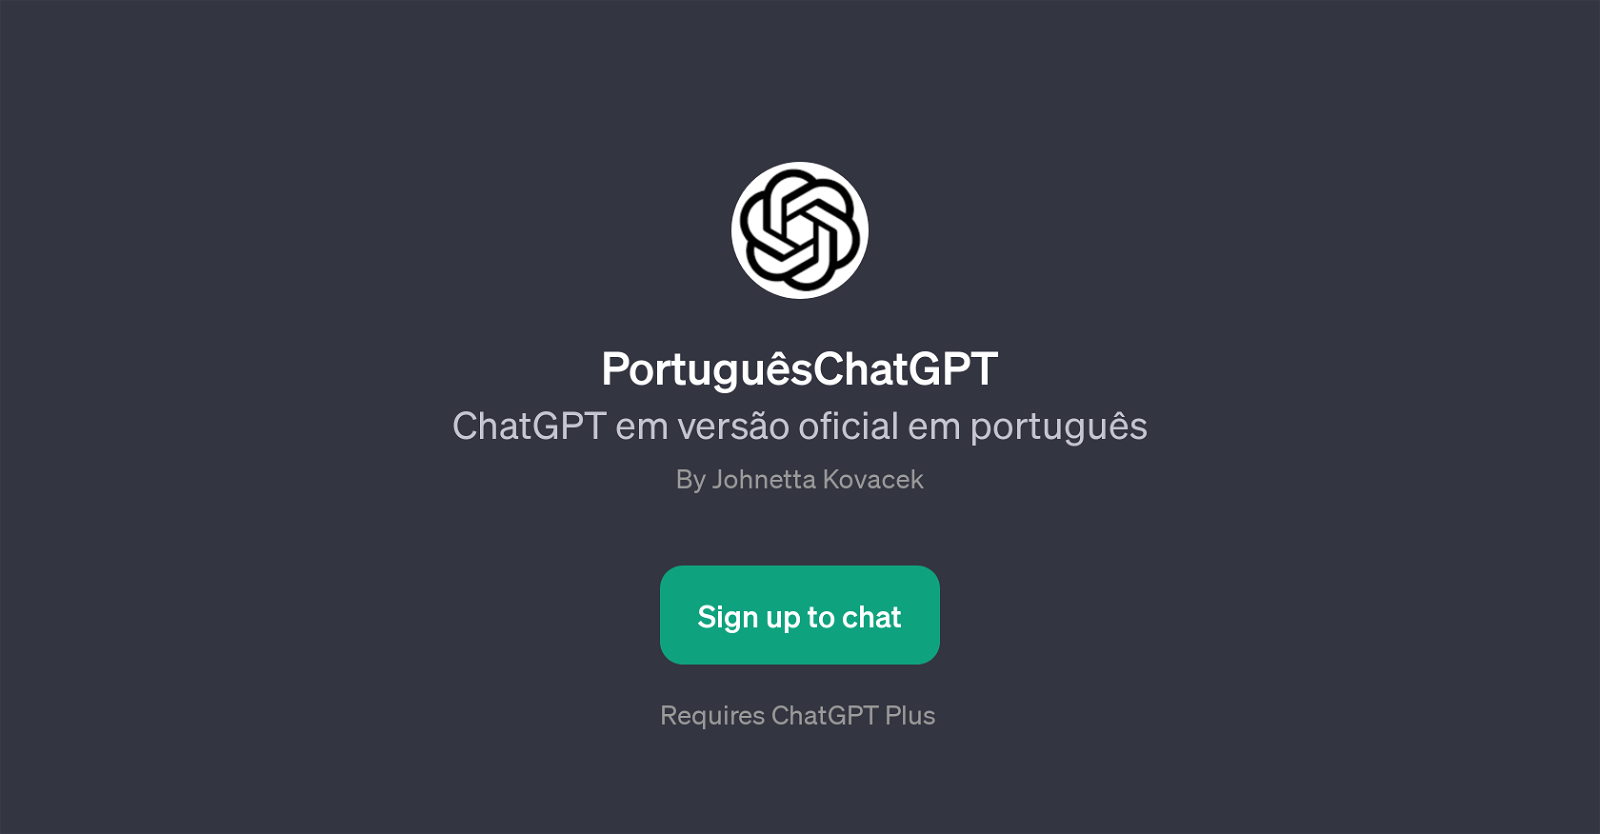 PortugusChatGPT website